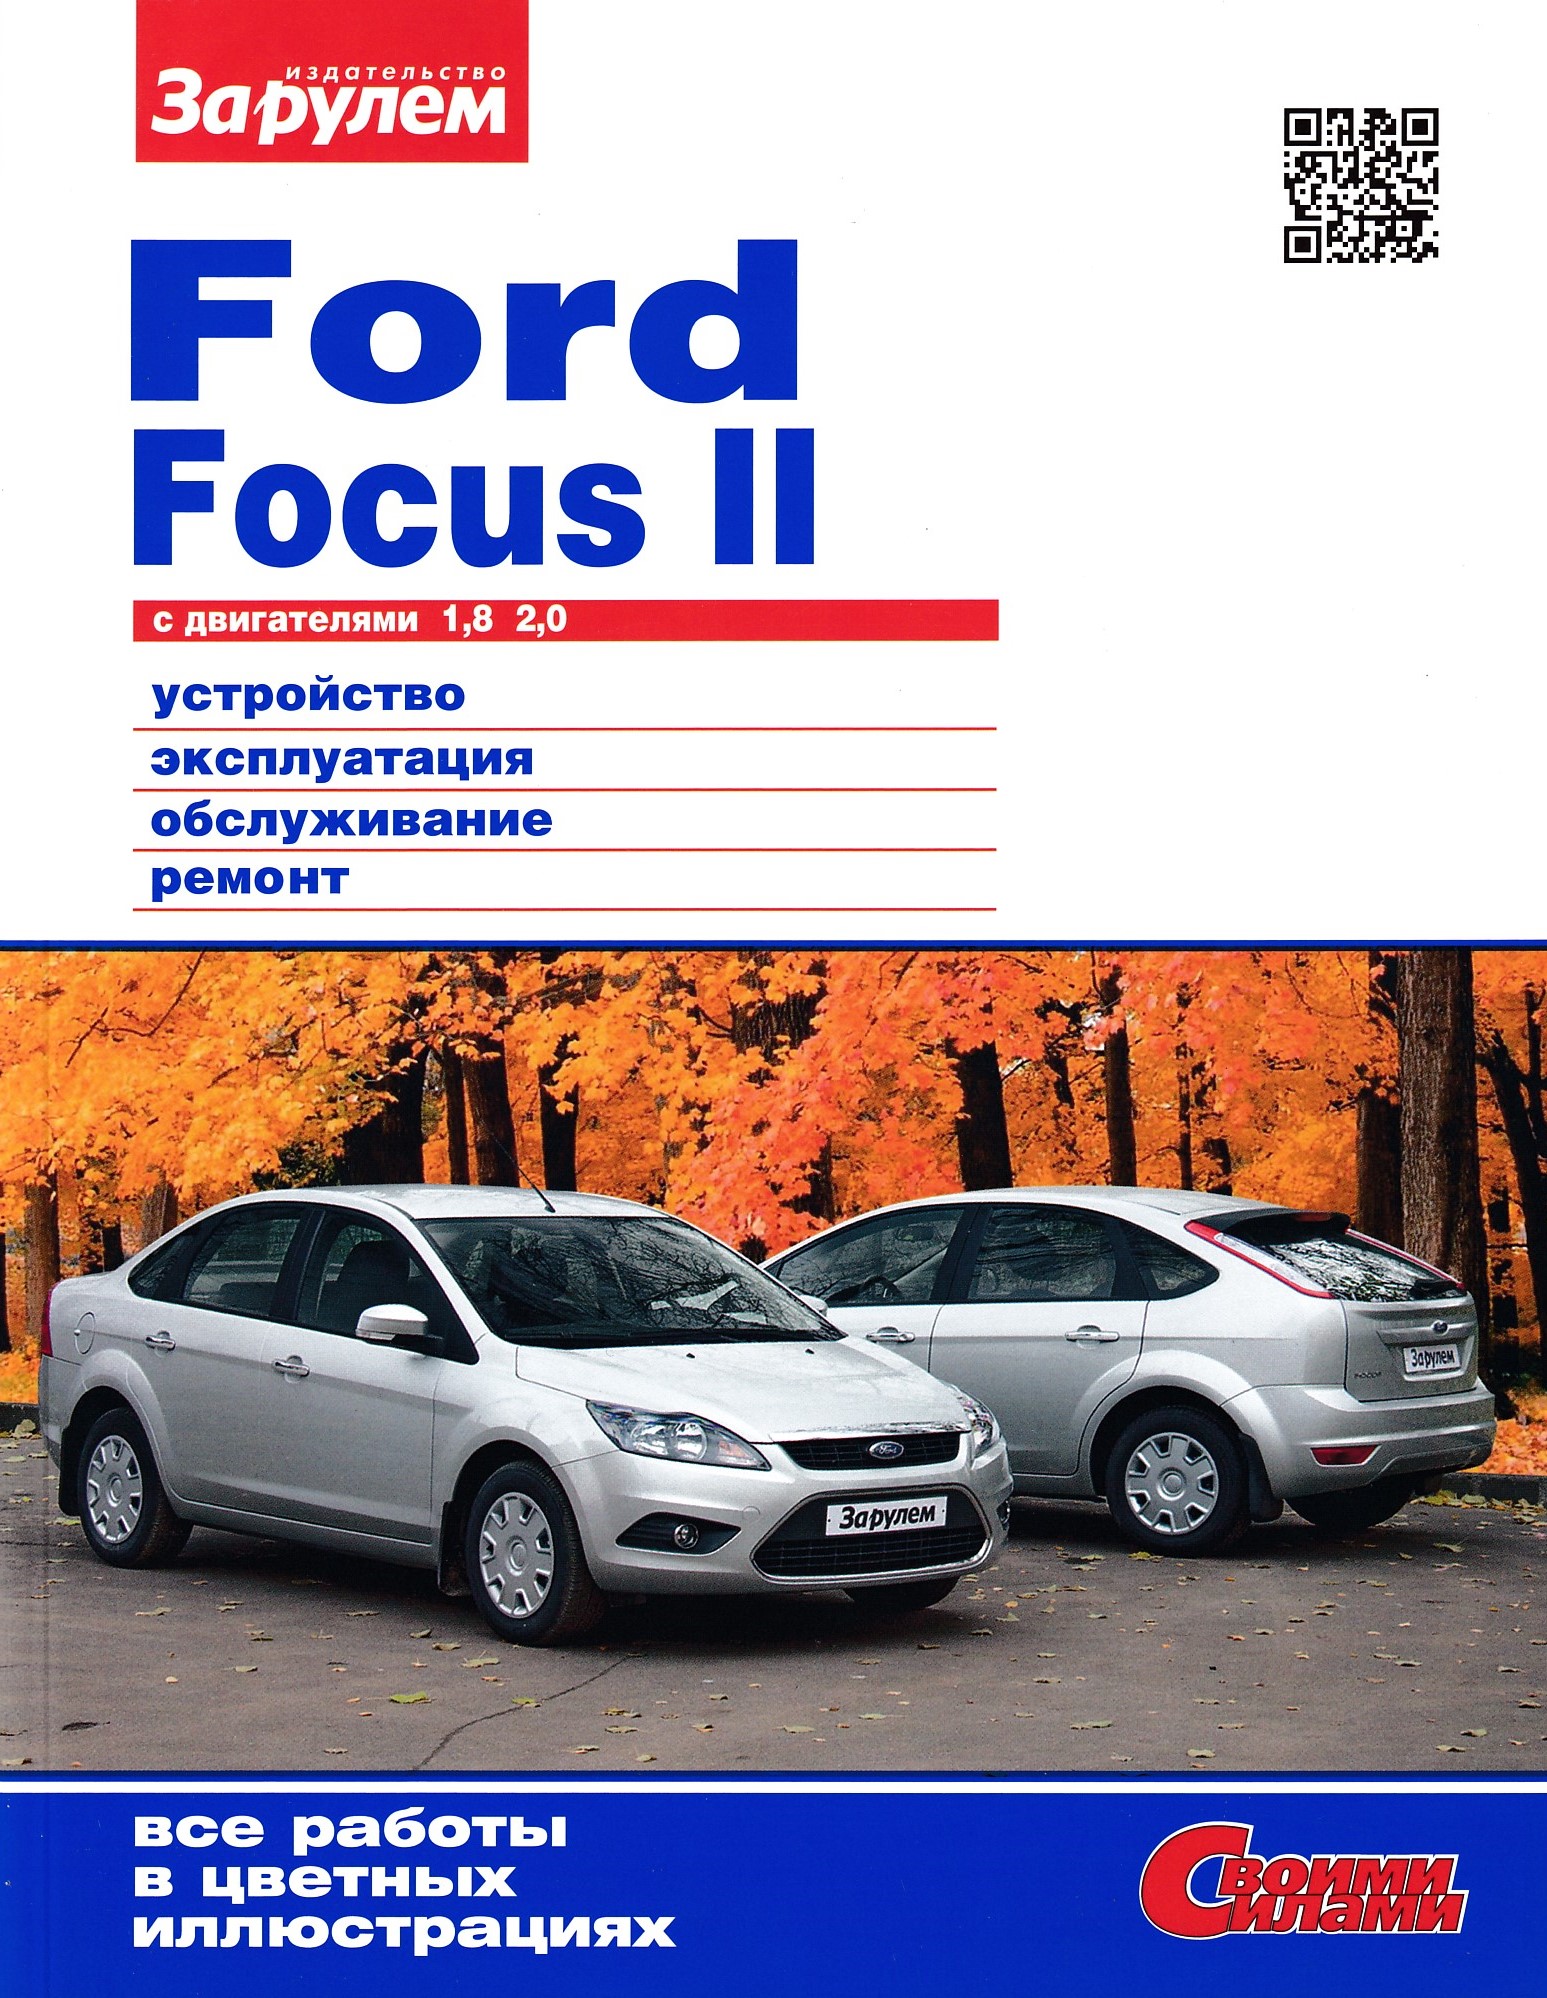 Каталог форд фокус 2. Книга Форд фокус 2. Журнал за рулём про Ford Focus 2. За рулем Форд фокус 2. Книга по ремонту Форд фокус 1.